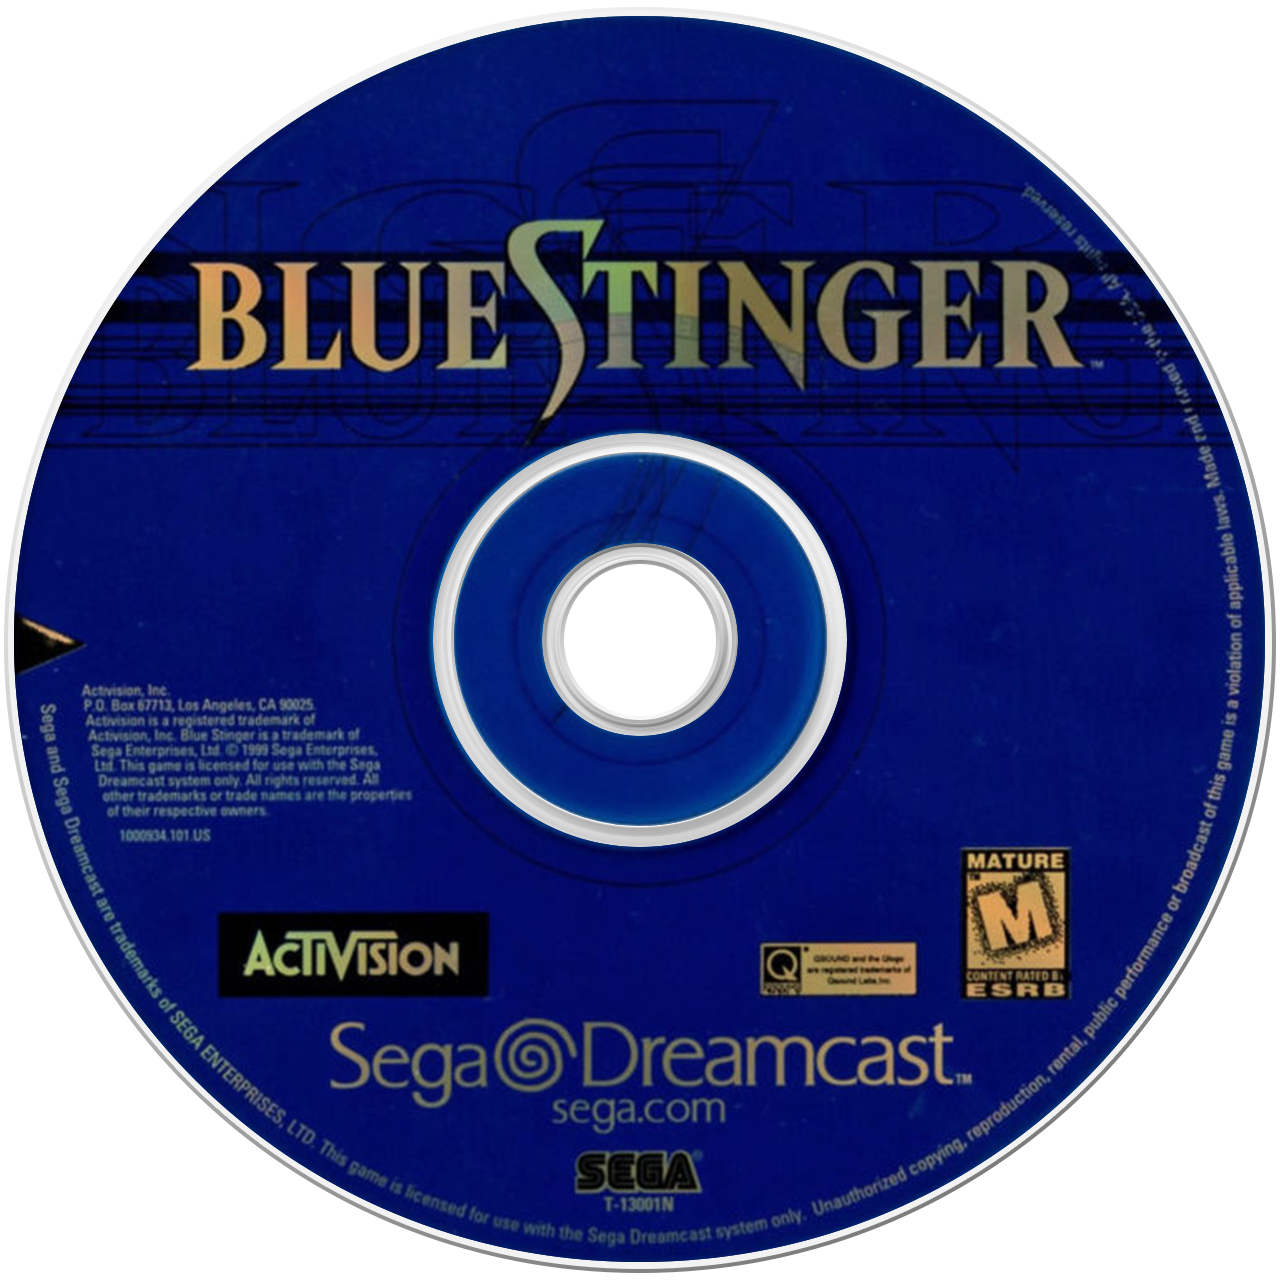 More information about "Sega Dreamcast Disc Images (US)"